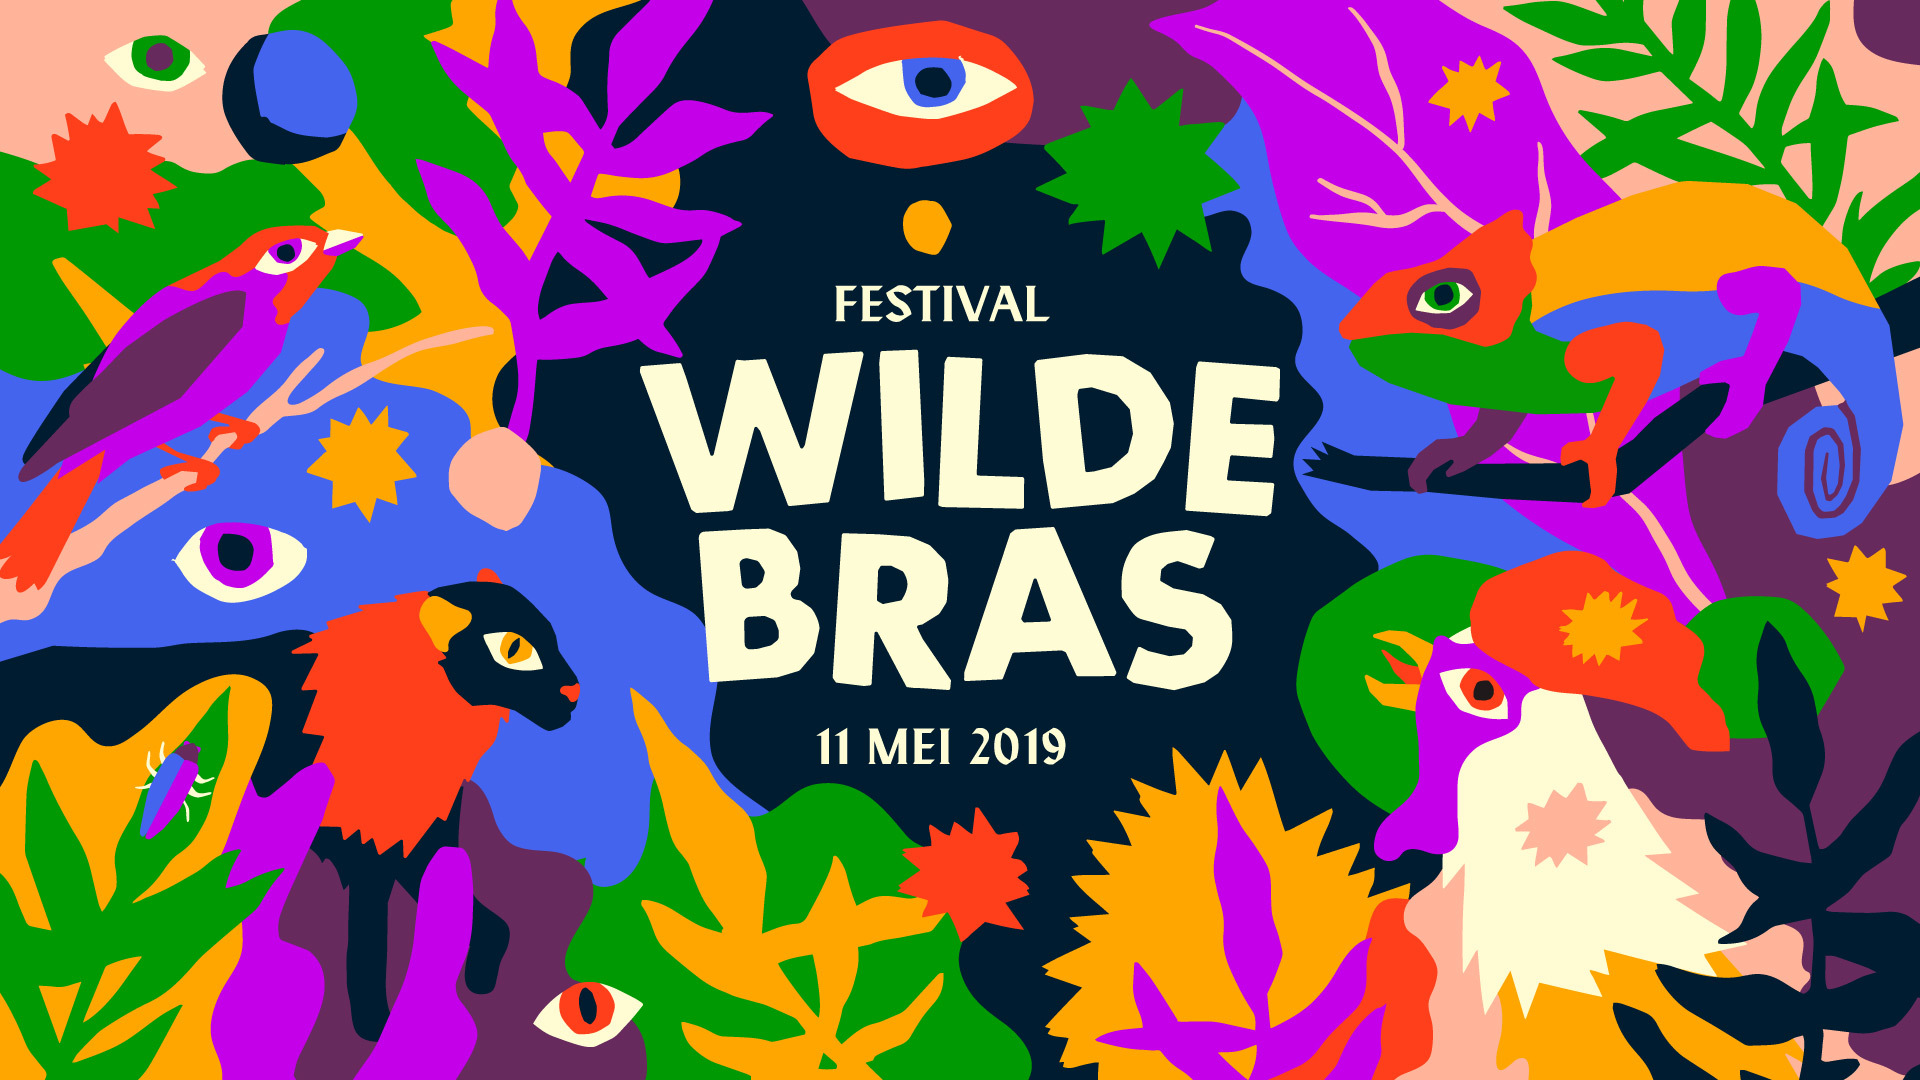 Wildebras Festival 2019 - Tickets, line-up, timetable & info